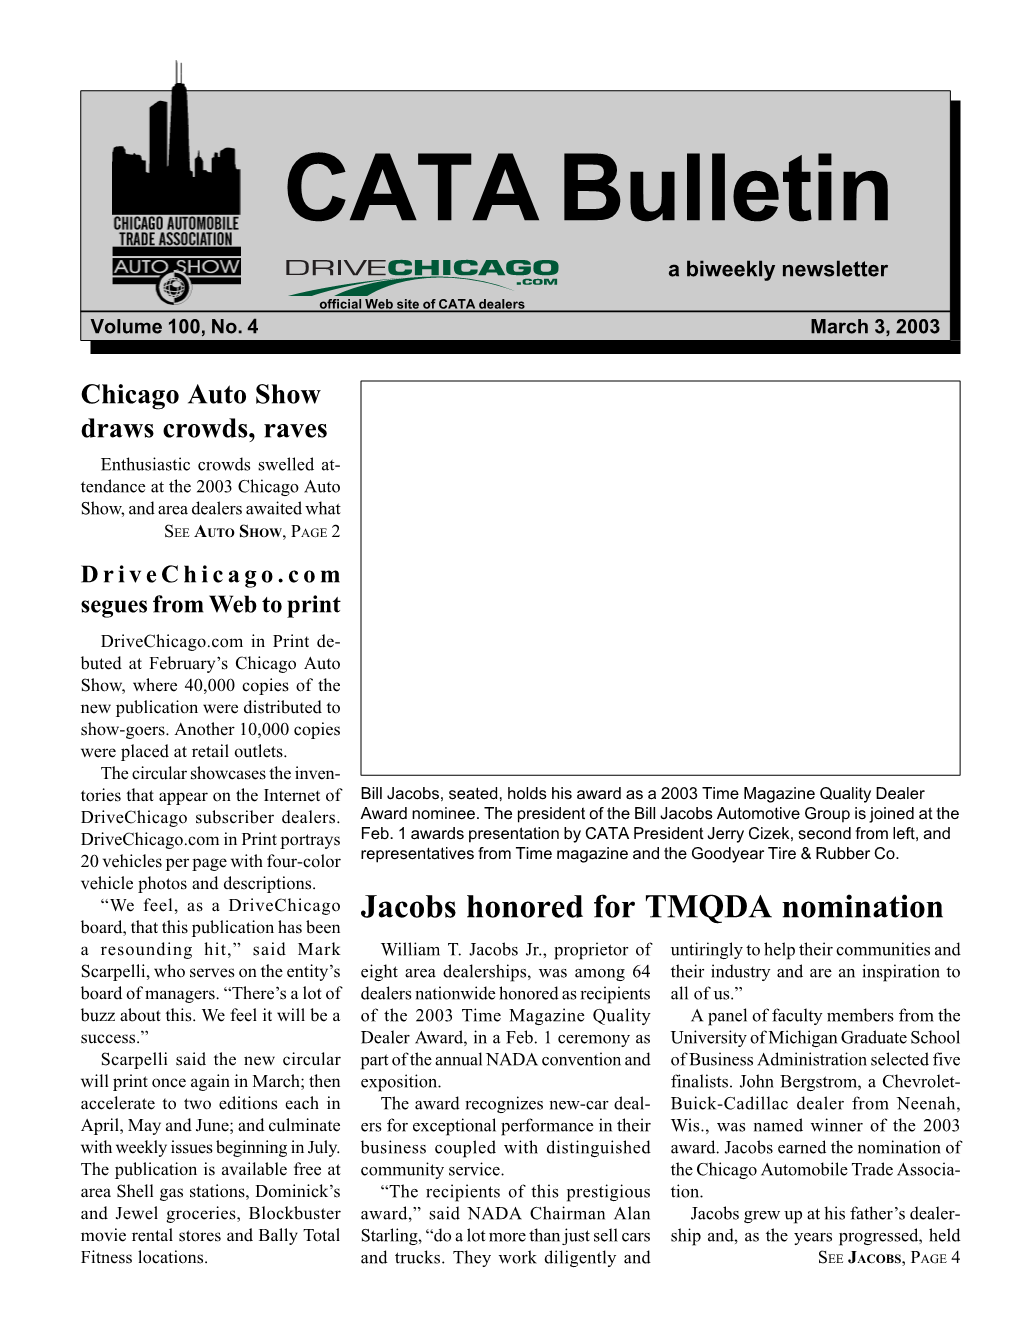 CATA Bulletin a Biweekly Newsletter